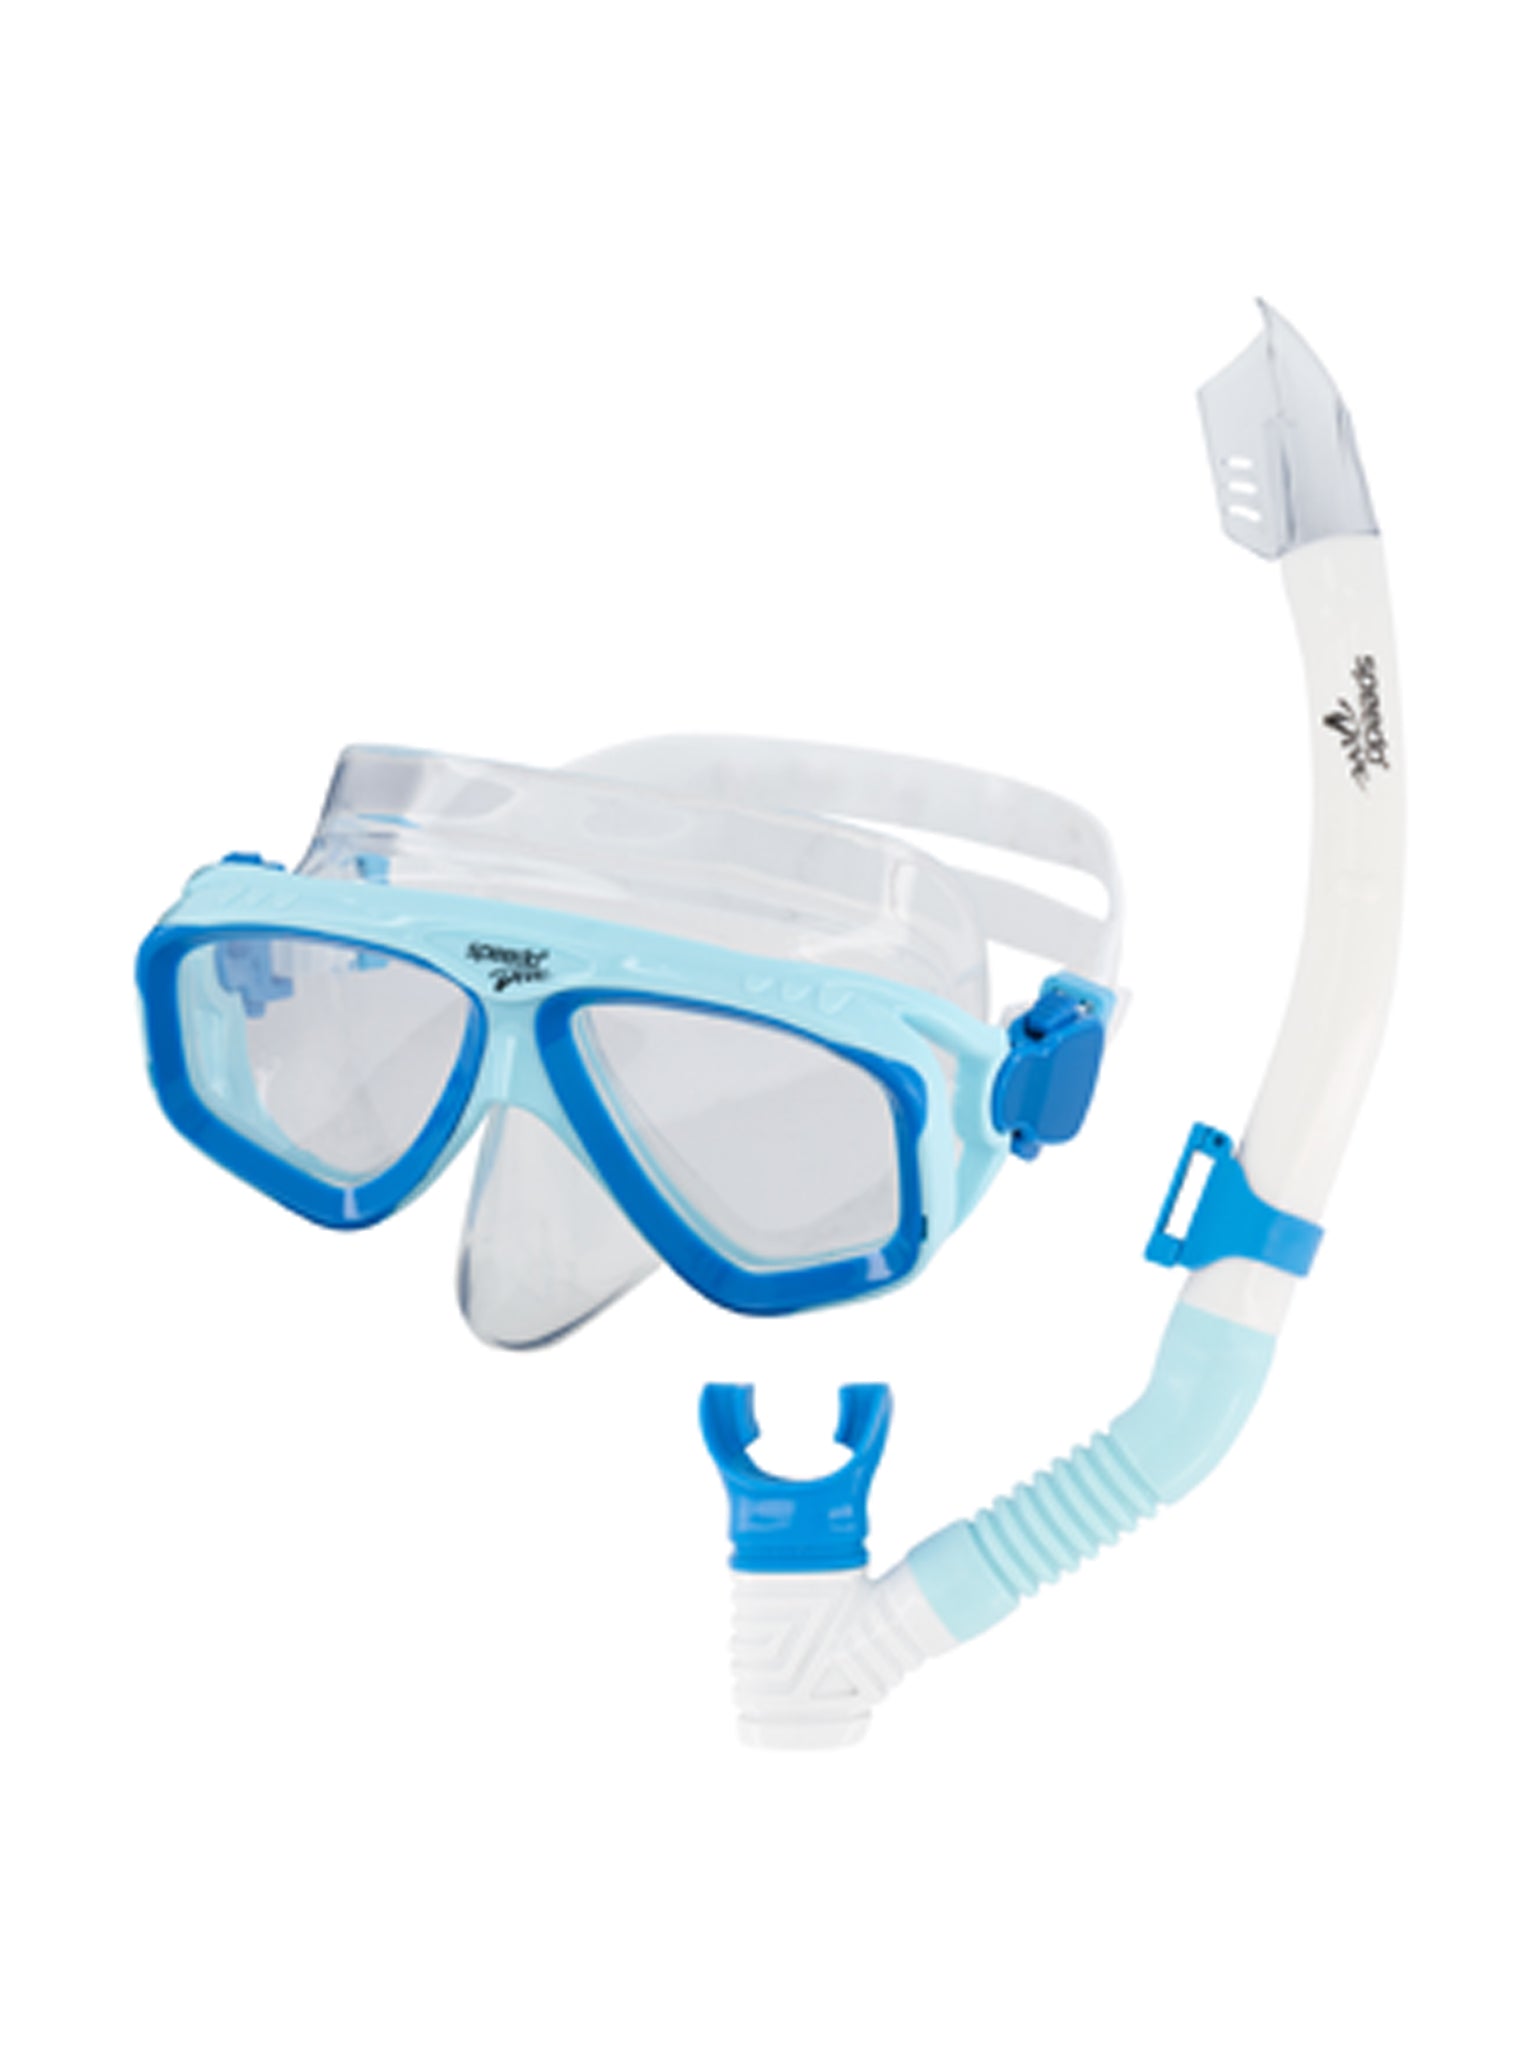 Adult Adventure Mask and Snorkel Set - Blue